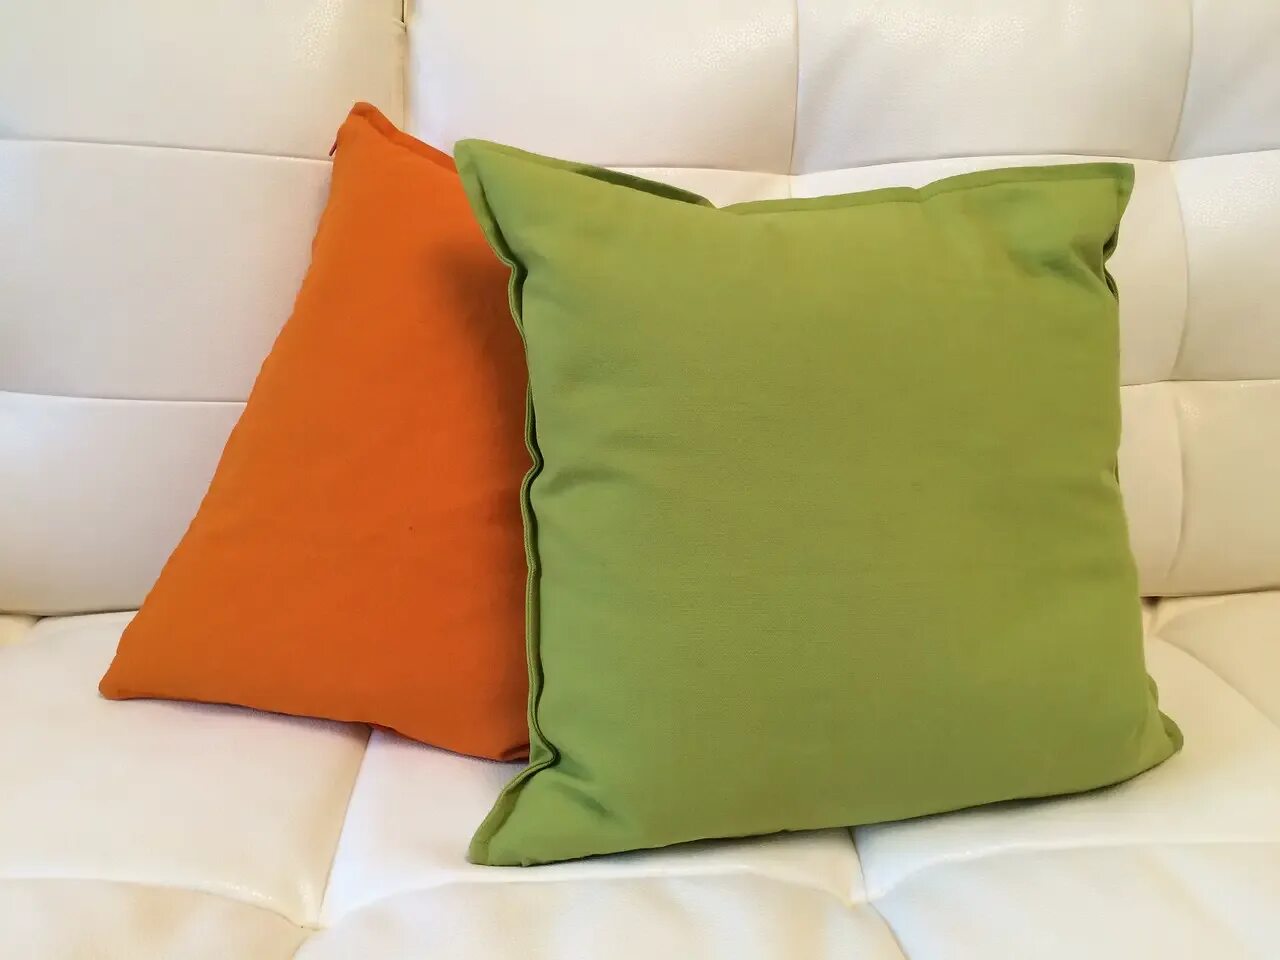 Купить подушки 5. Подушка. Диванная подушка. Подушки декоративные на диван. Цветные подушки.